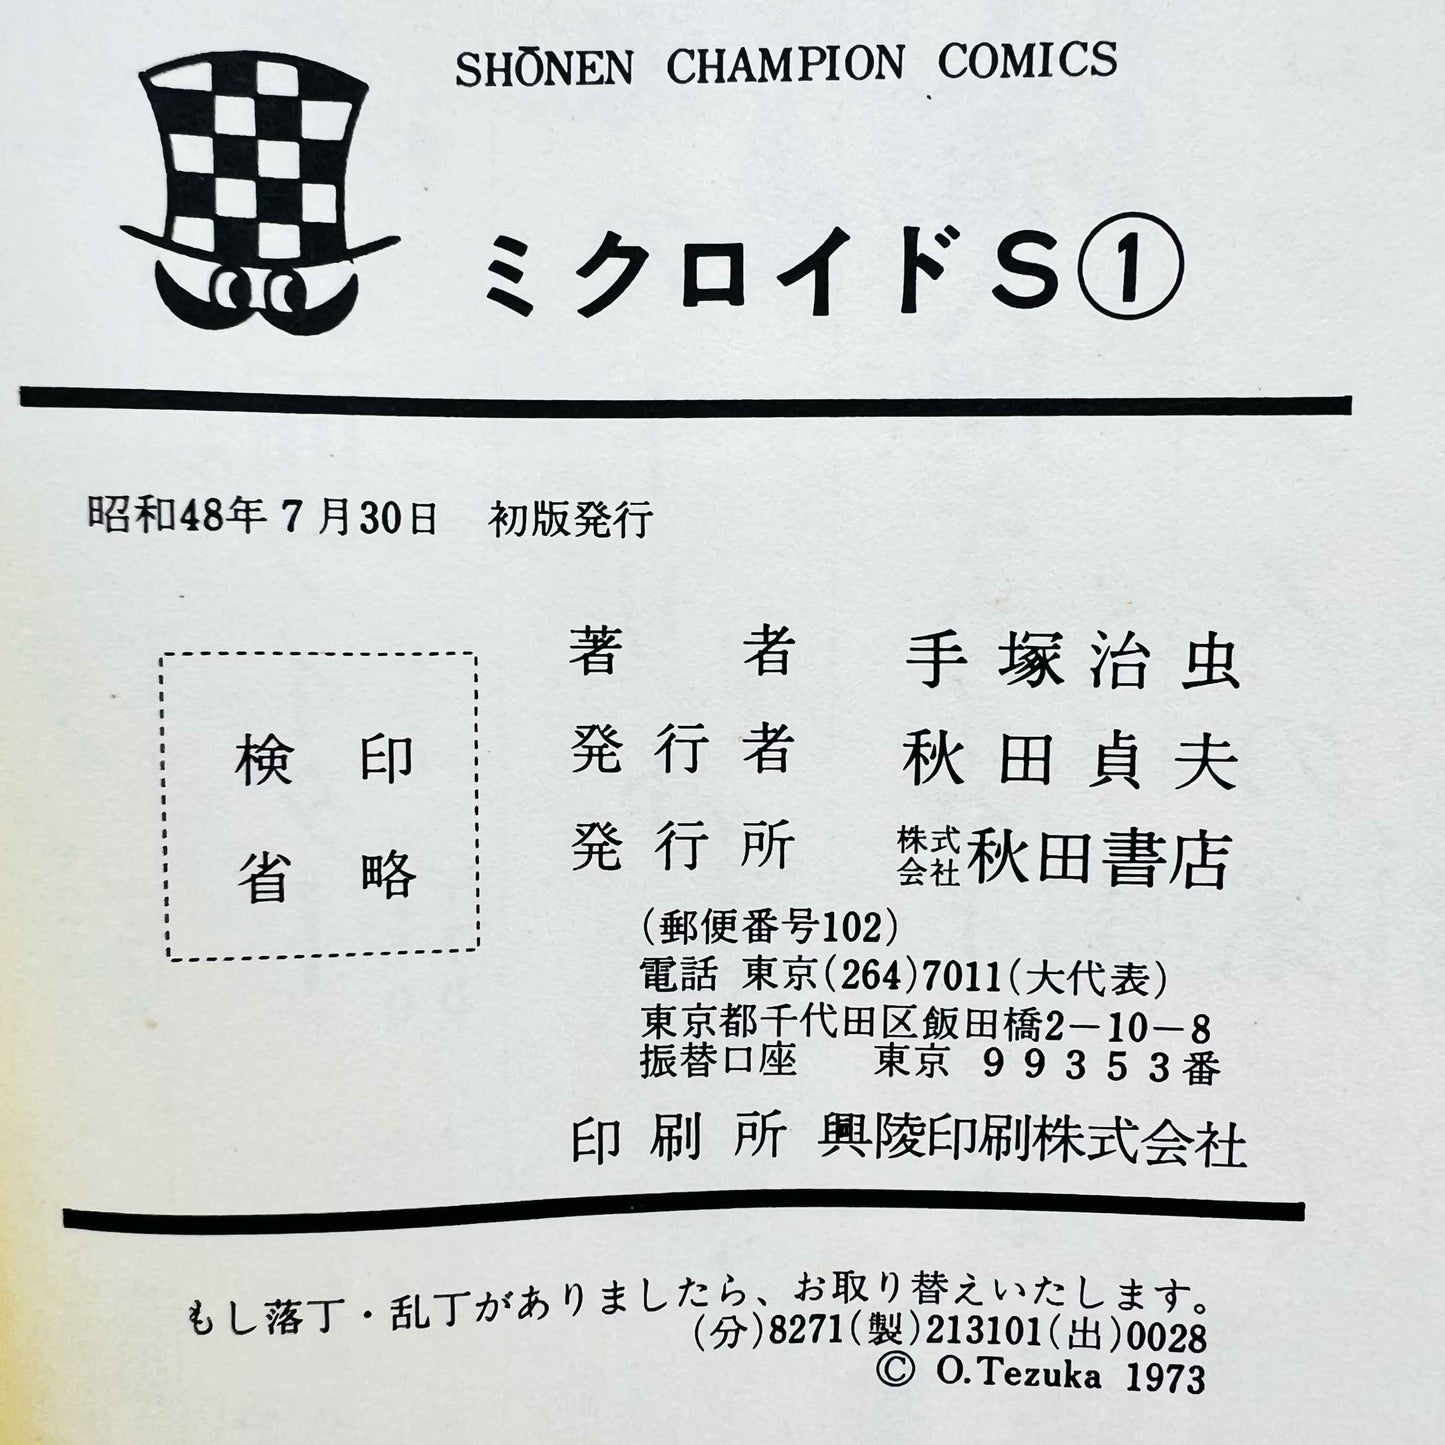 Microid S (Osamu Tezuka) - Volume 01 - 1stPrint.net - 1st First Print Edition Manga Store - M-MICROIDS-01-001